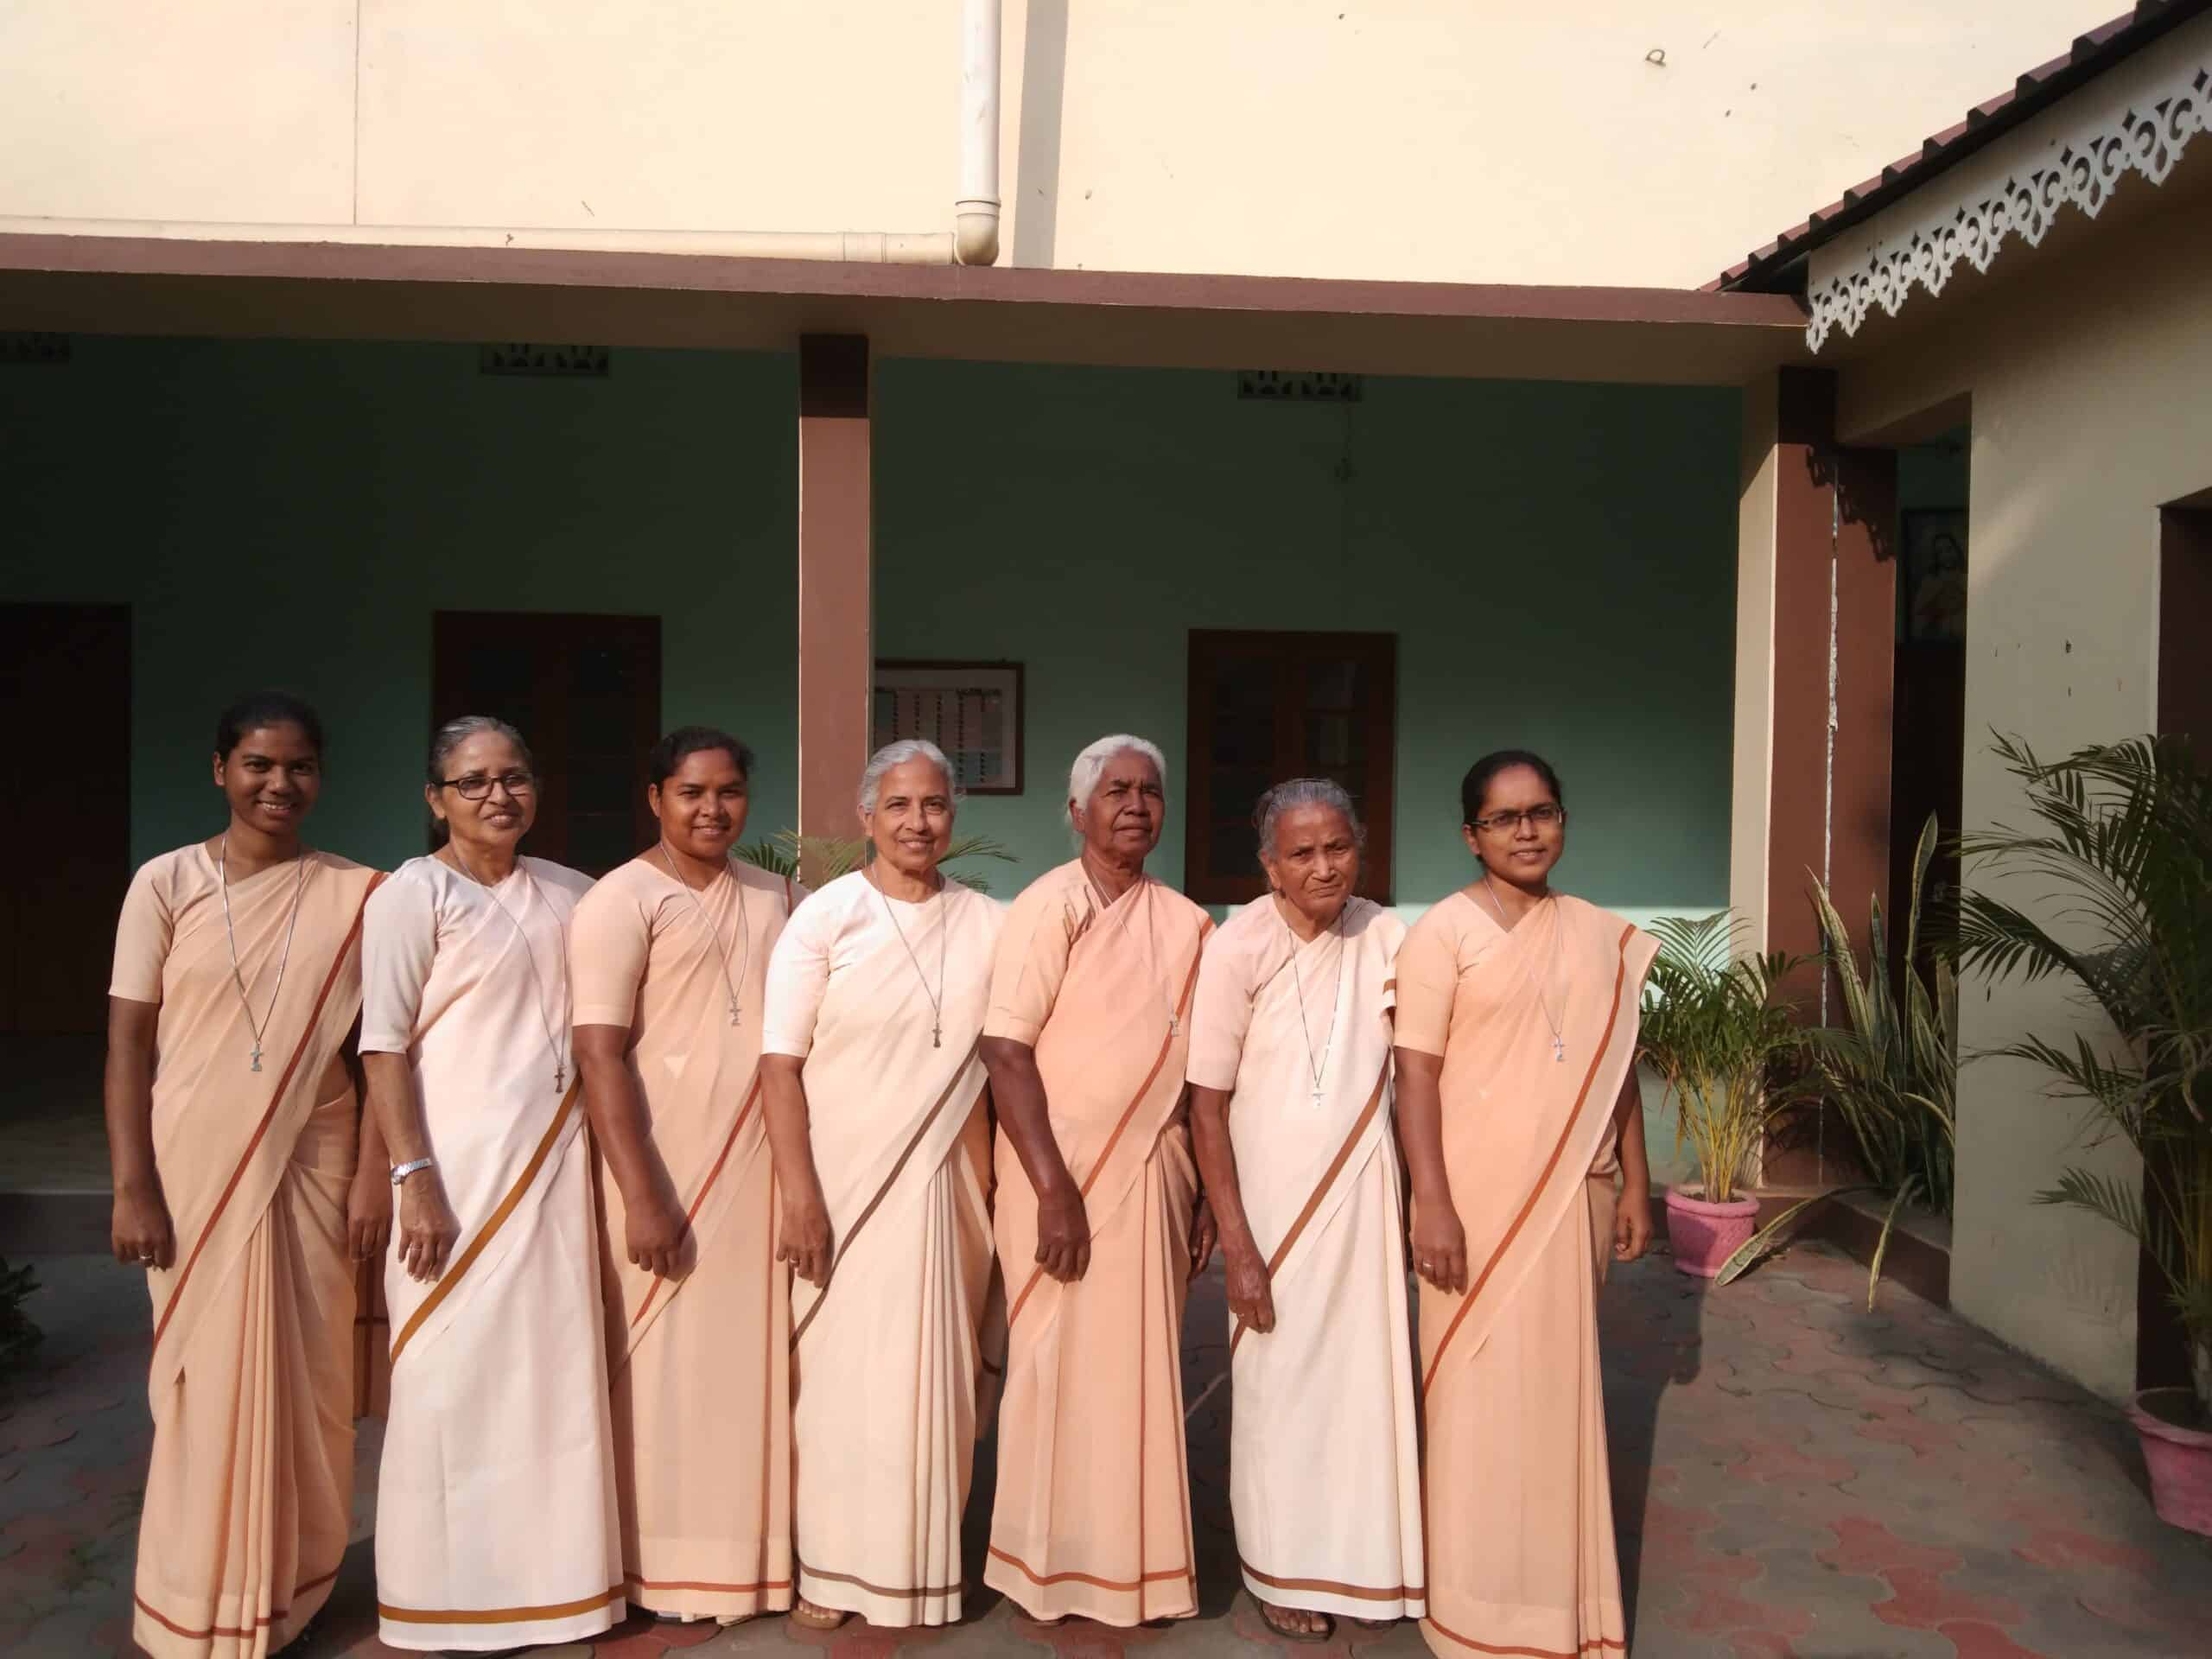 Help Renovate a Convent in India